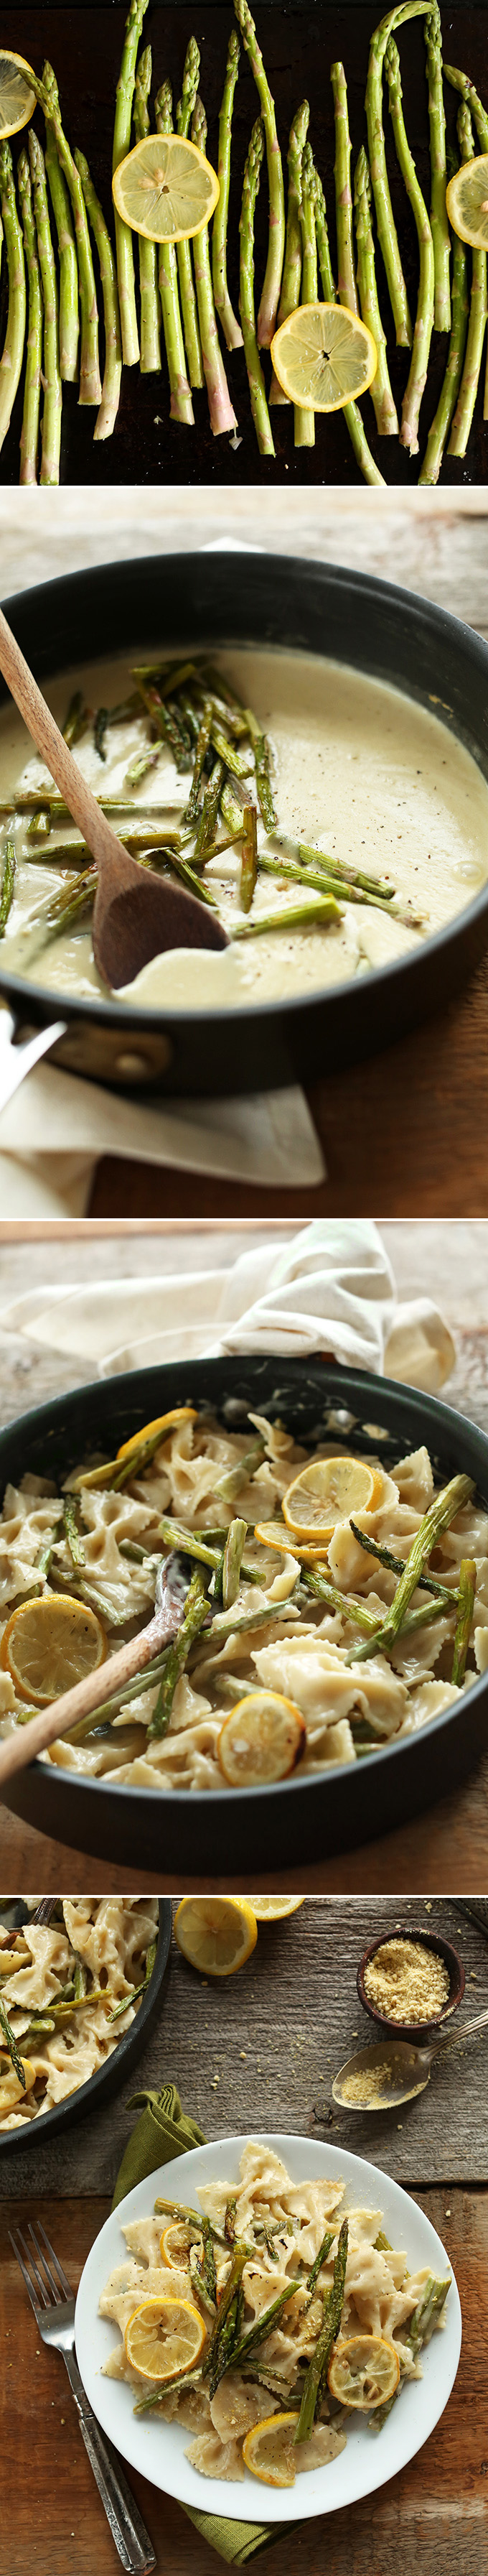 Vegan-Lemon-Asparagus-Pasta-30-minutes-9-ingredients-SO-creamy-and-delicious-vegan